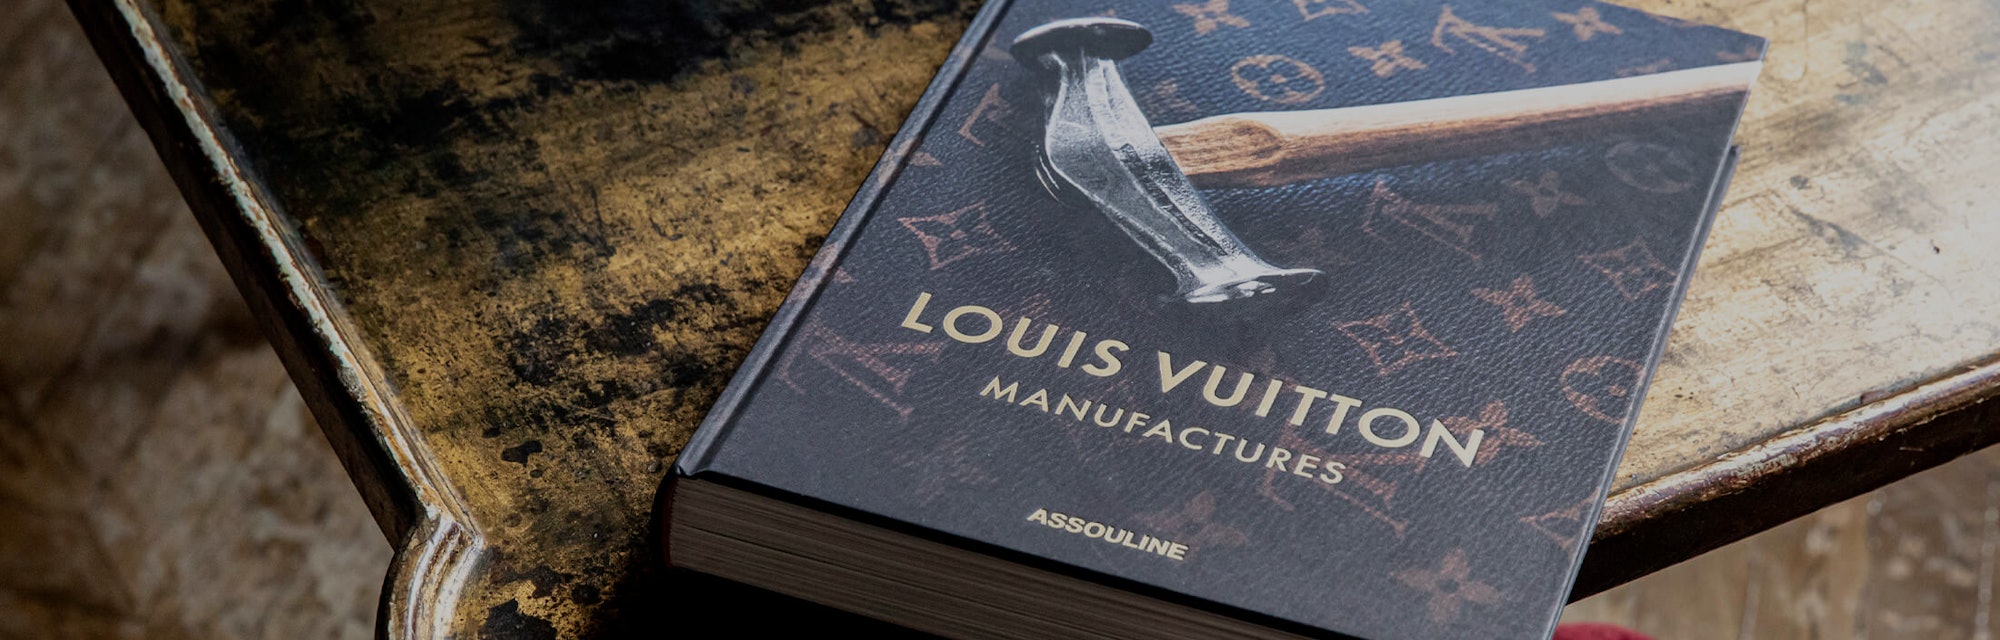 louis vuitton manufacturers book